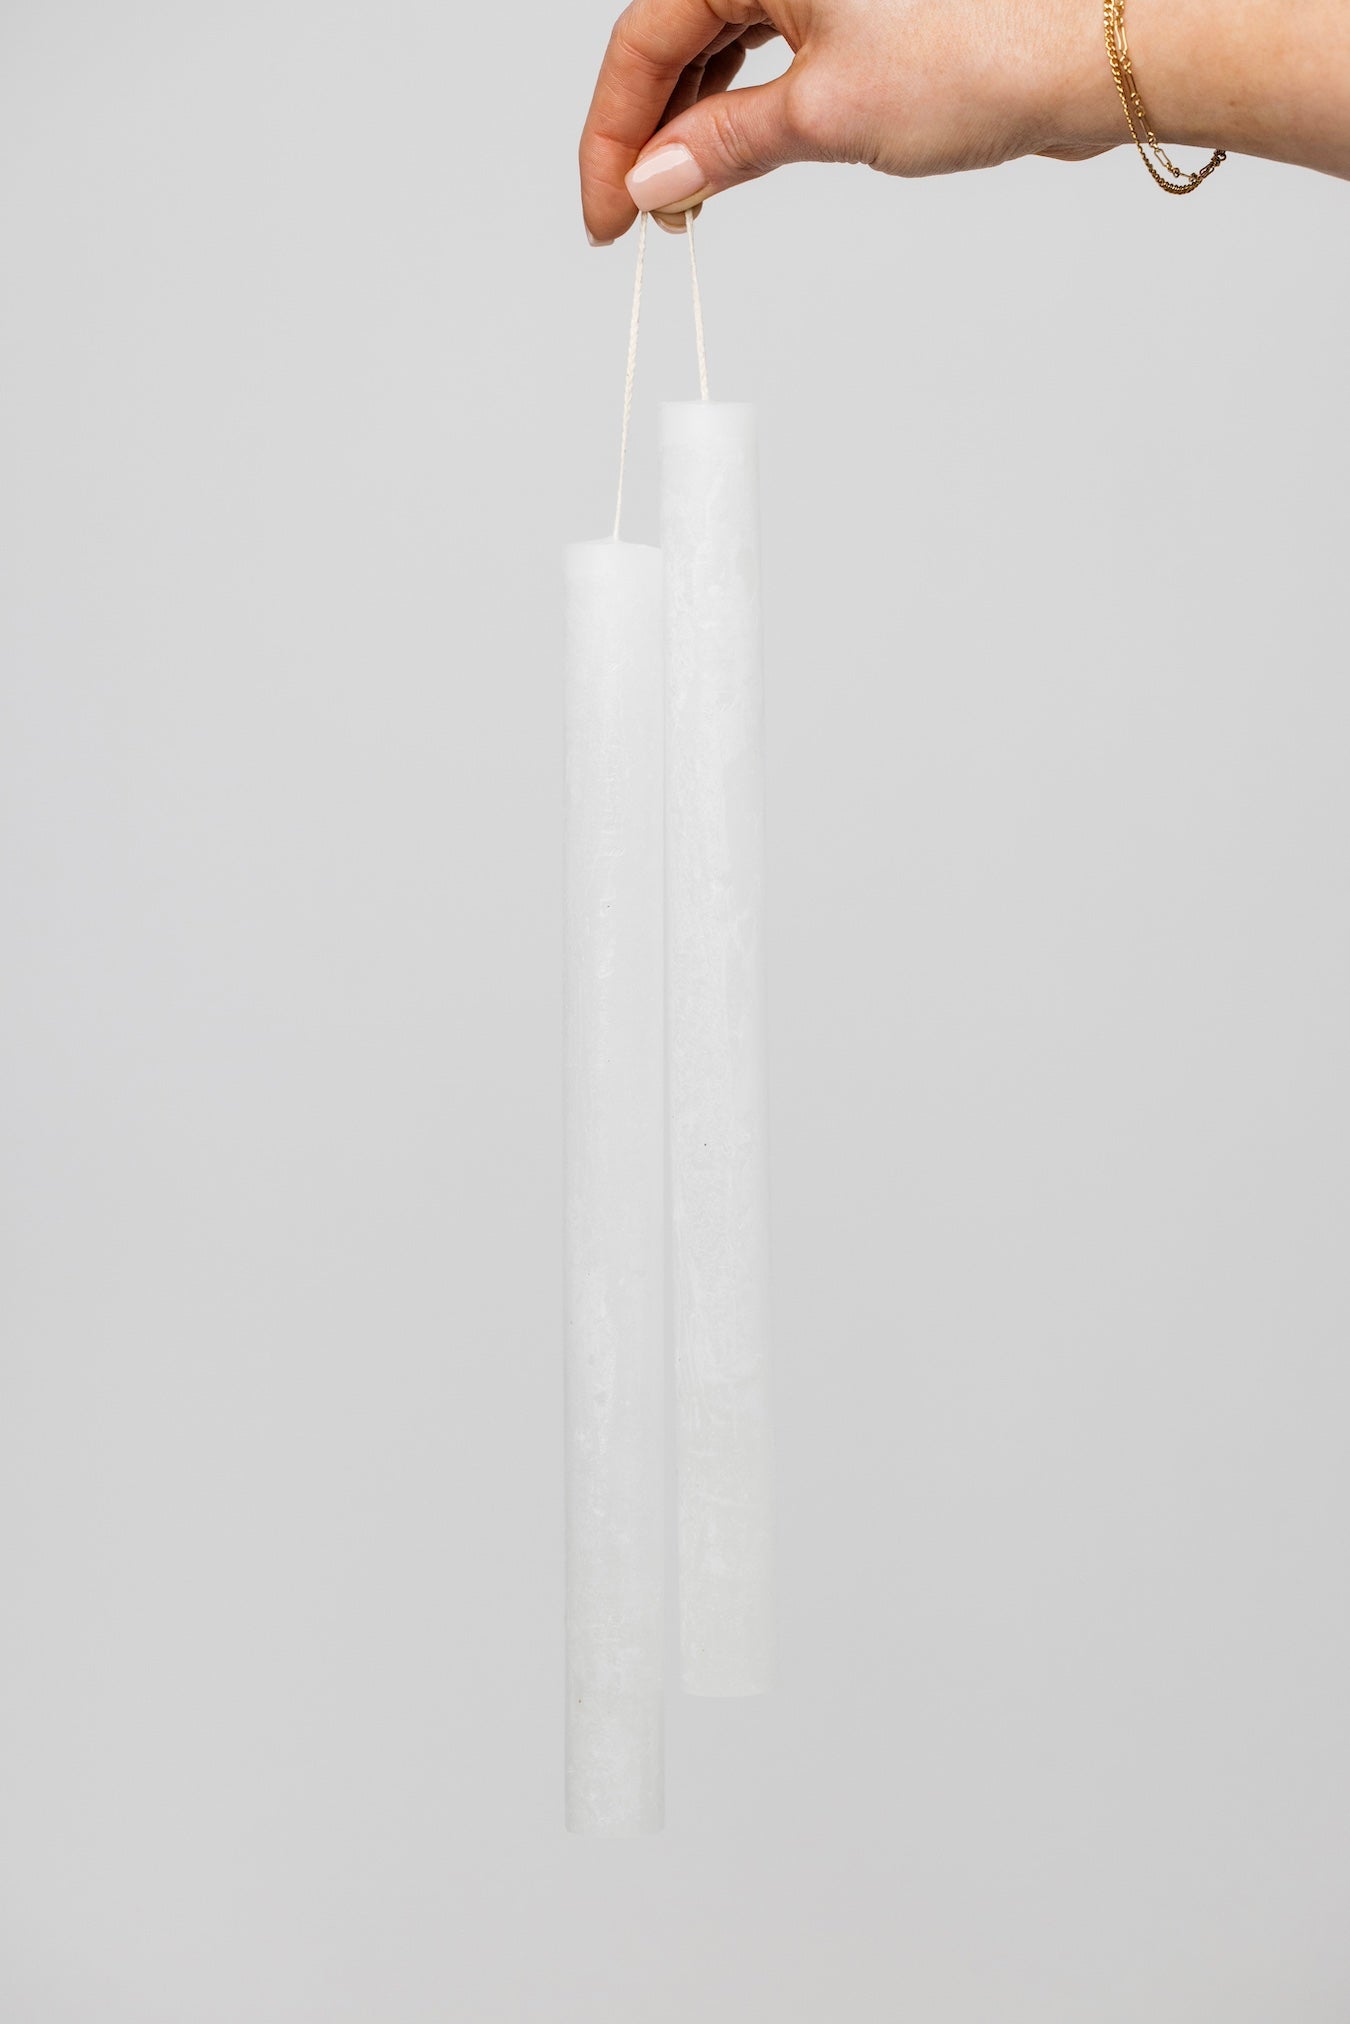 Cruz Taper Candle - Set of 2